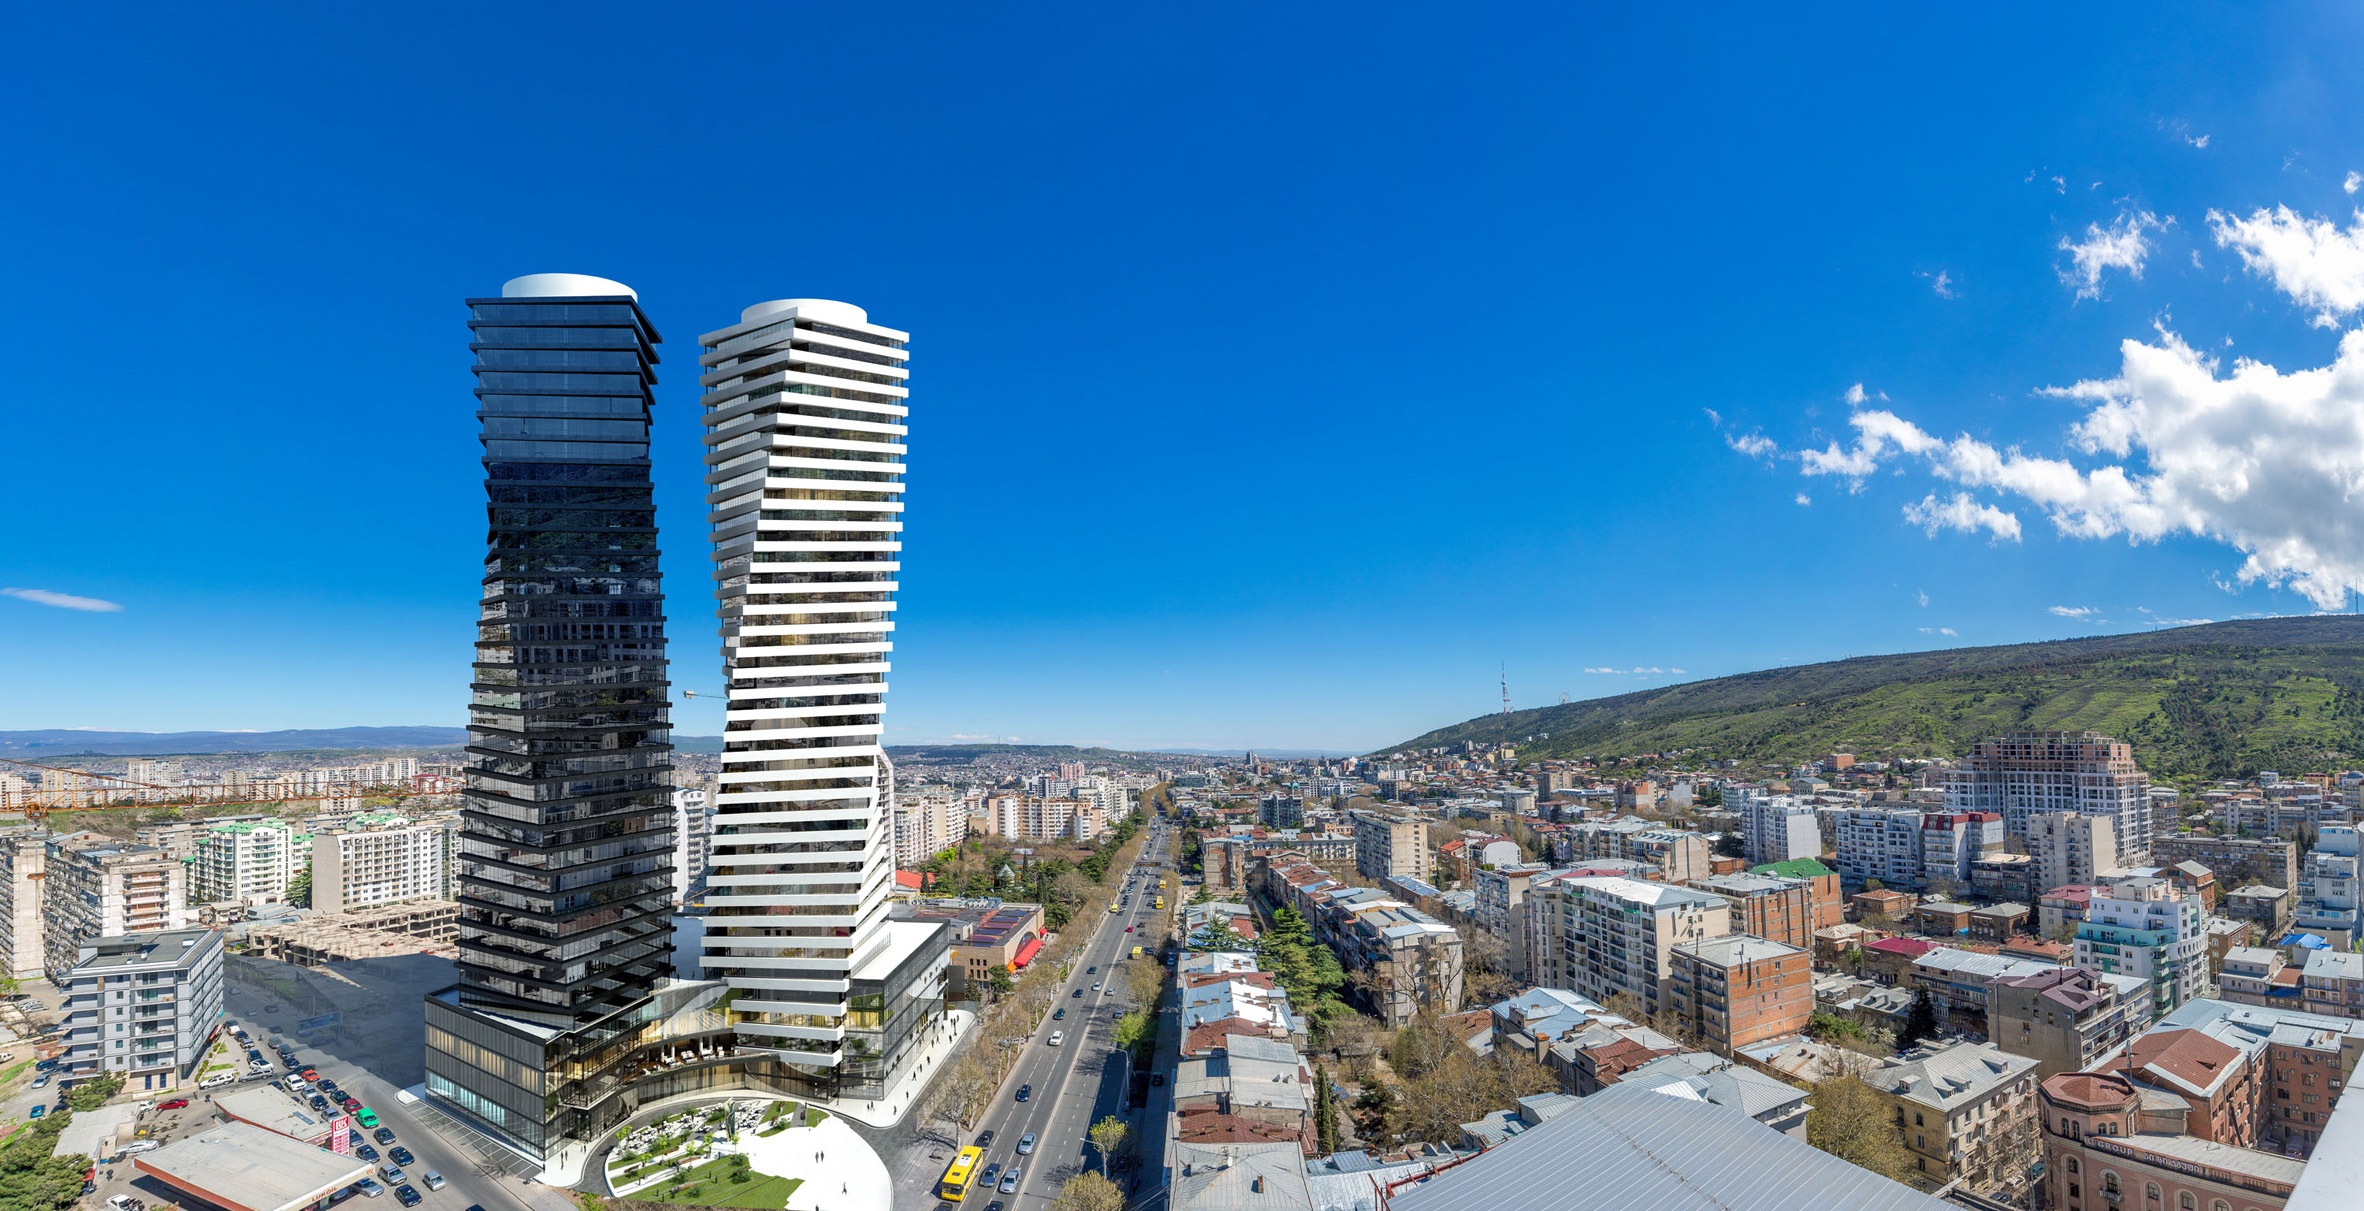 Axis Towers in Tbilisi, Georgia